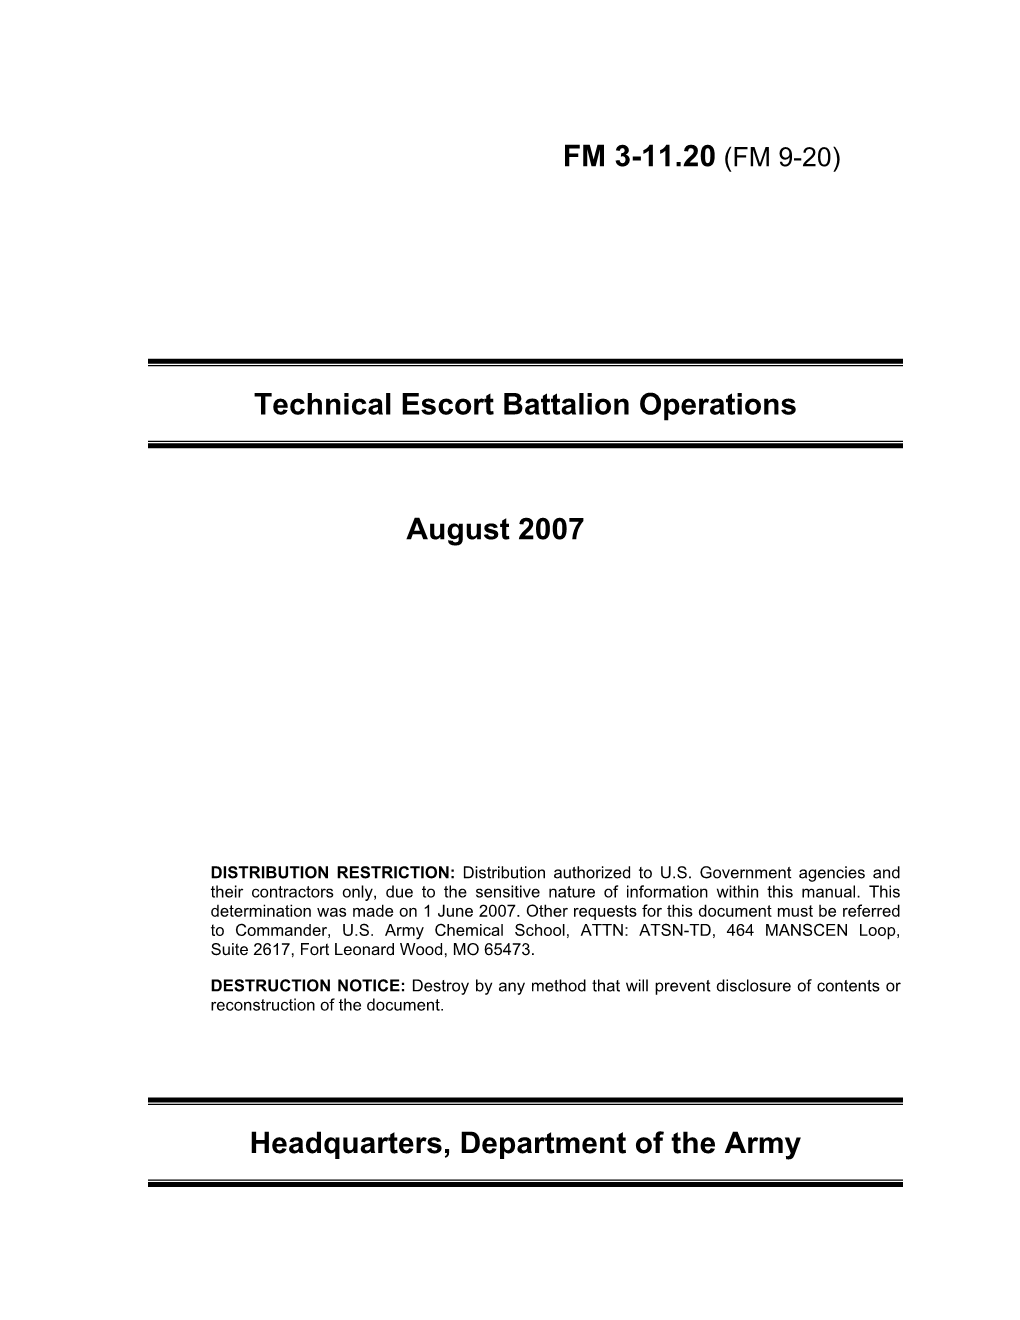 FM 3-11.20 (FM 9-20) Technical Escort Battalion Operations August